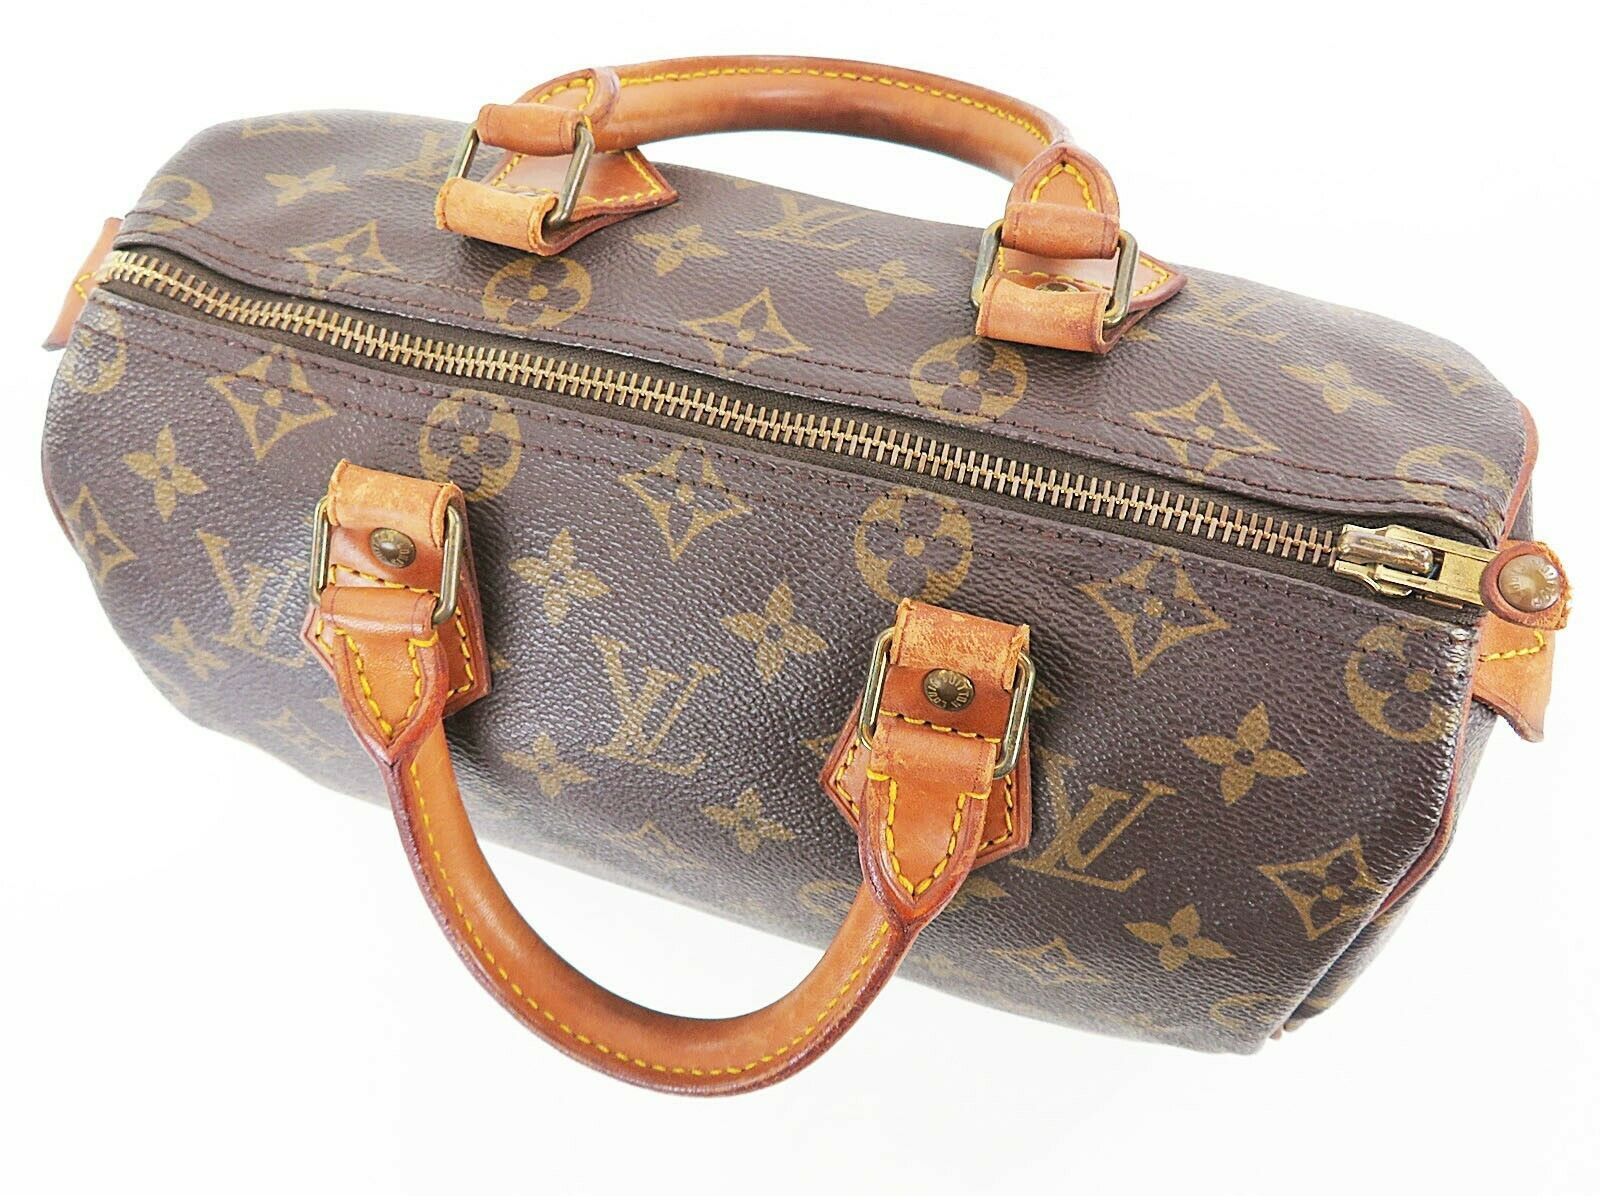 Authentic LOUIS VUITTON Speedy 25 Monogram Boston Handbag Purse #36253